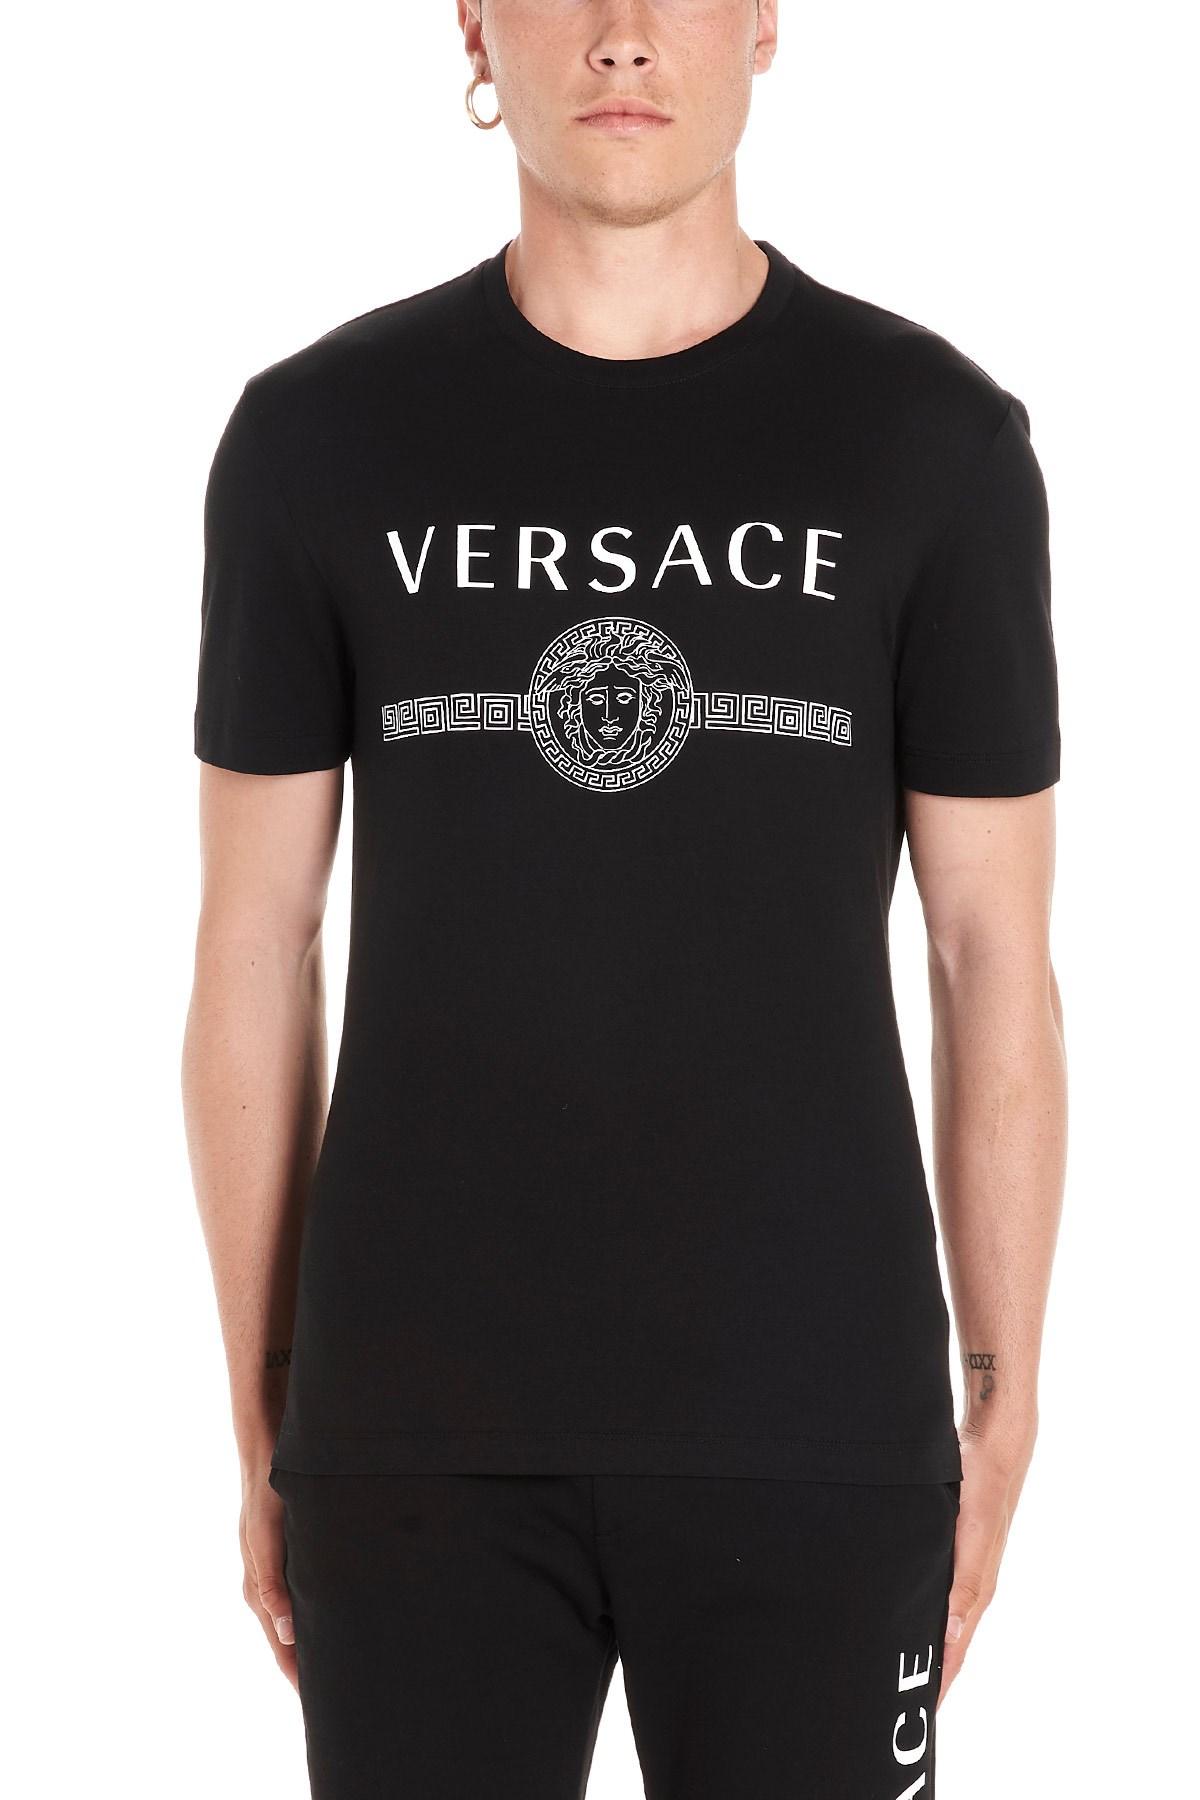 Versace Cotton Vintage Logo T-shirt in Black for Men - Lyst